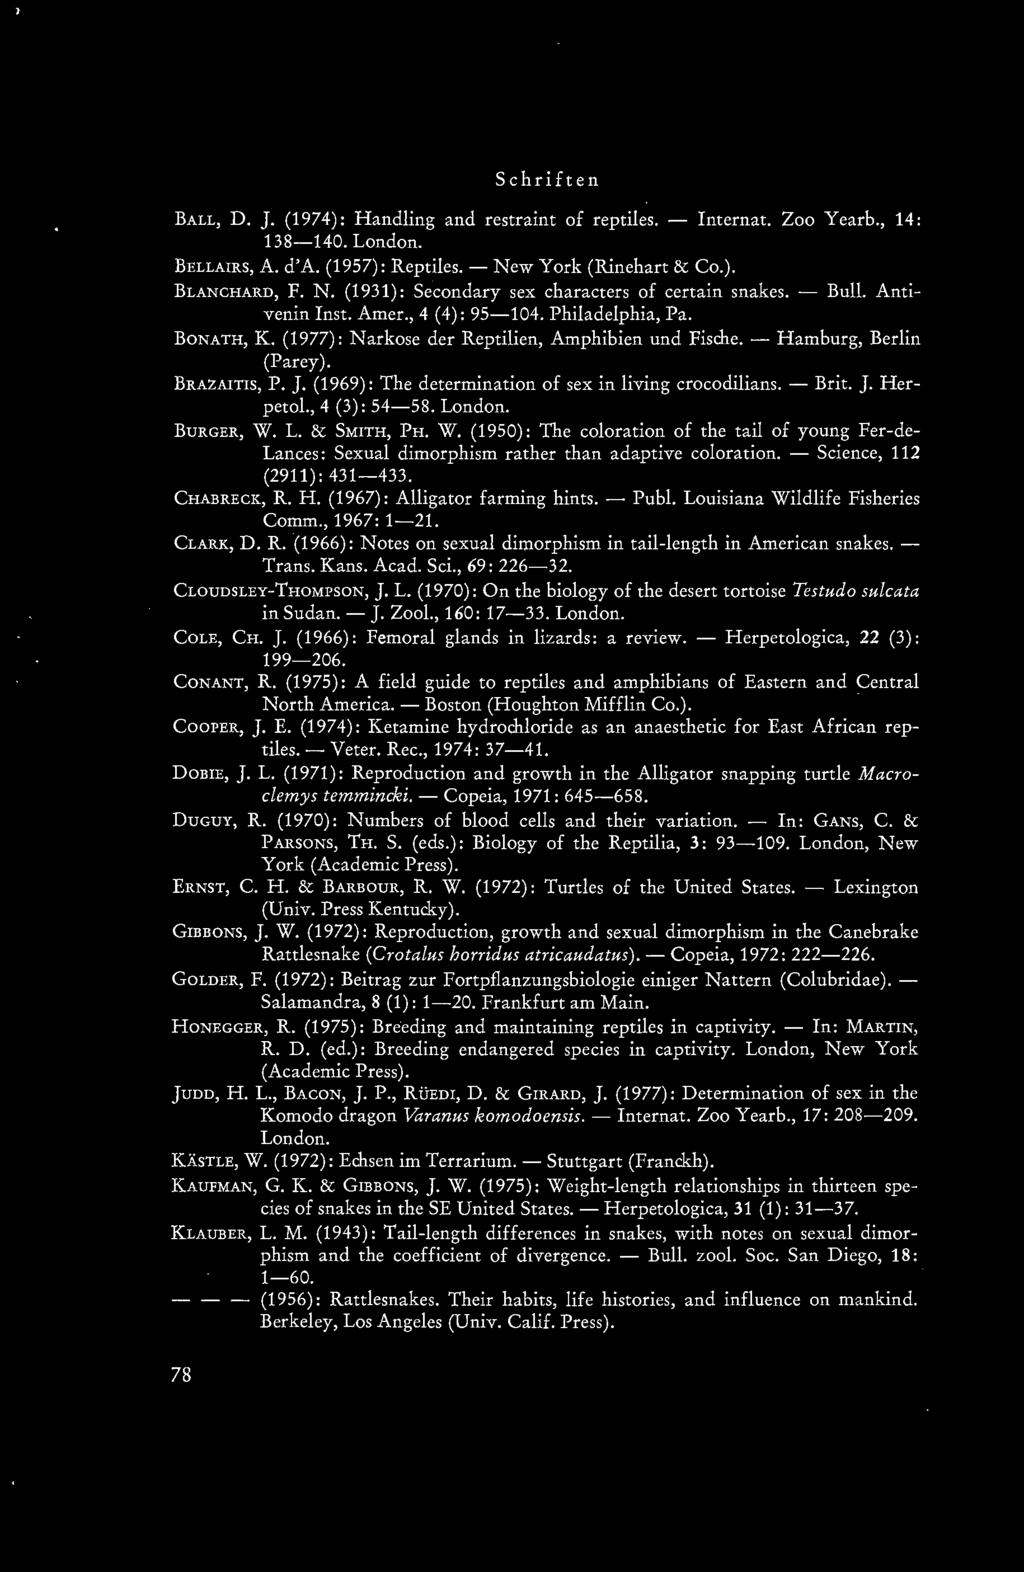 . Schriften BALL, D. J. (1974): Handling and restraint of reptiles. - Internat. Zoo Yearb., 14: 138-140. London. BELLAIRS, A. d'a. (1957): Reptiles. - Ne